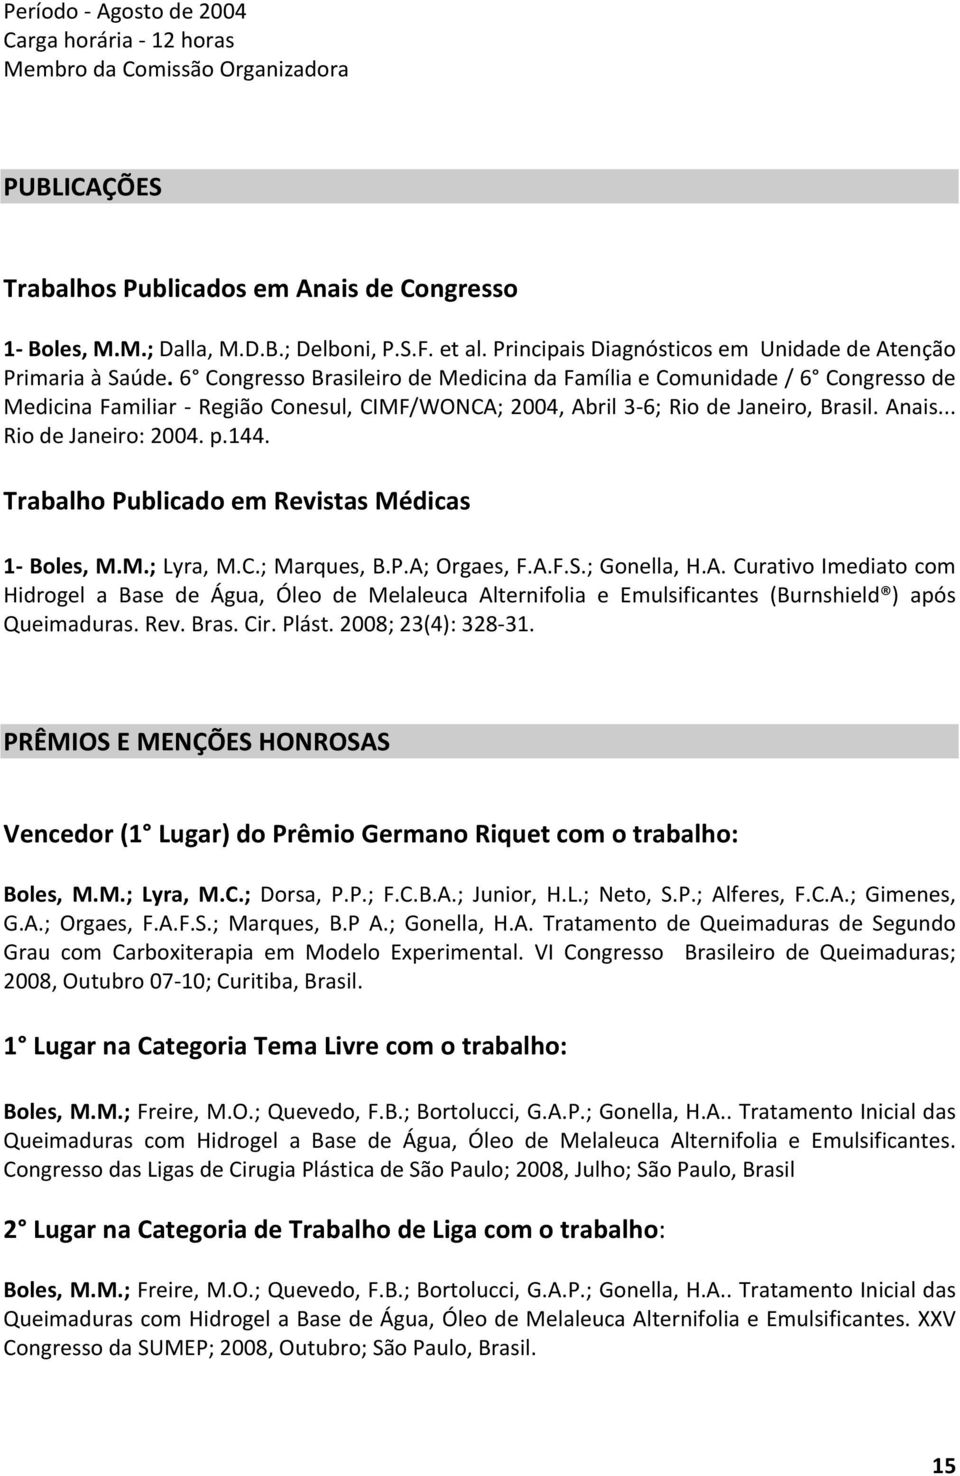 6 Congresso Brasileiro de Medicina da Família e Comunidade / 6 Congresso de Medicina Familiar - Região Conesul, CIMF/WONCA; 2004, Abril 3-6; Rio de Janeiro, Brasil. Anais... Rio de Janeiro: 2004. p.